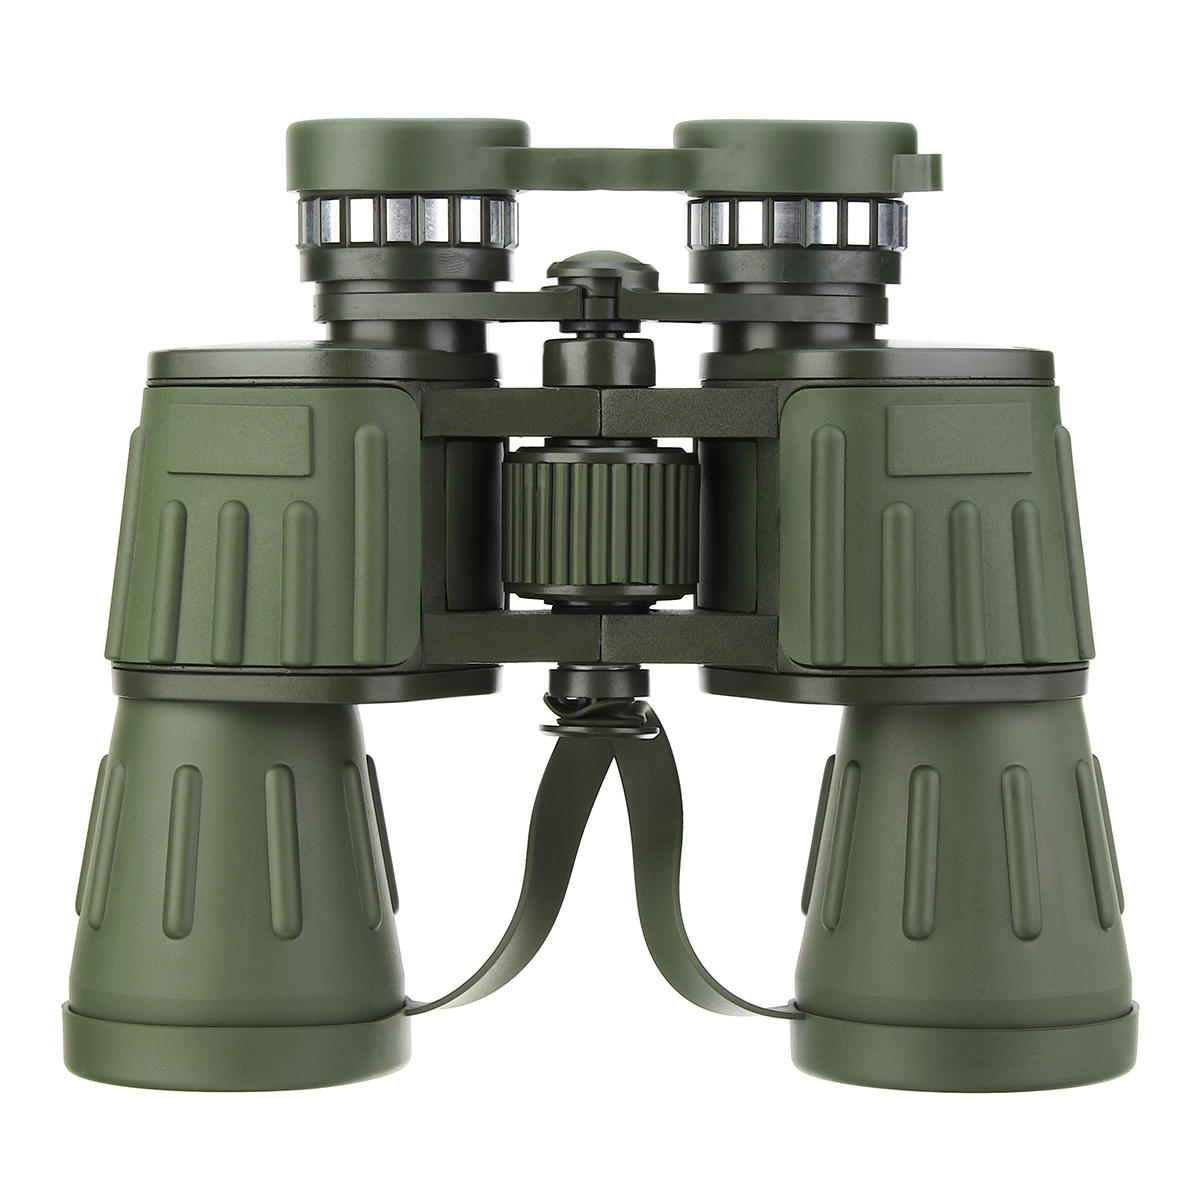 IPRee 60x50 BNV-M1 Militar Exército Binocular HD Óptica Camping Caça Telescópio Dia / Noite Visão Diurna / Noturna